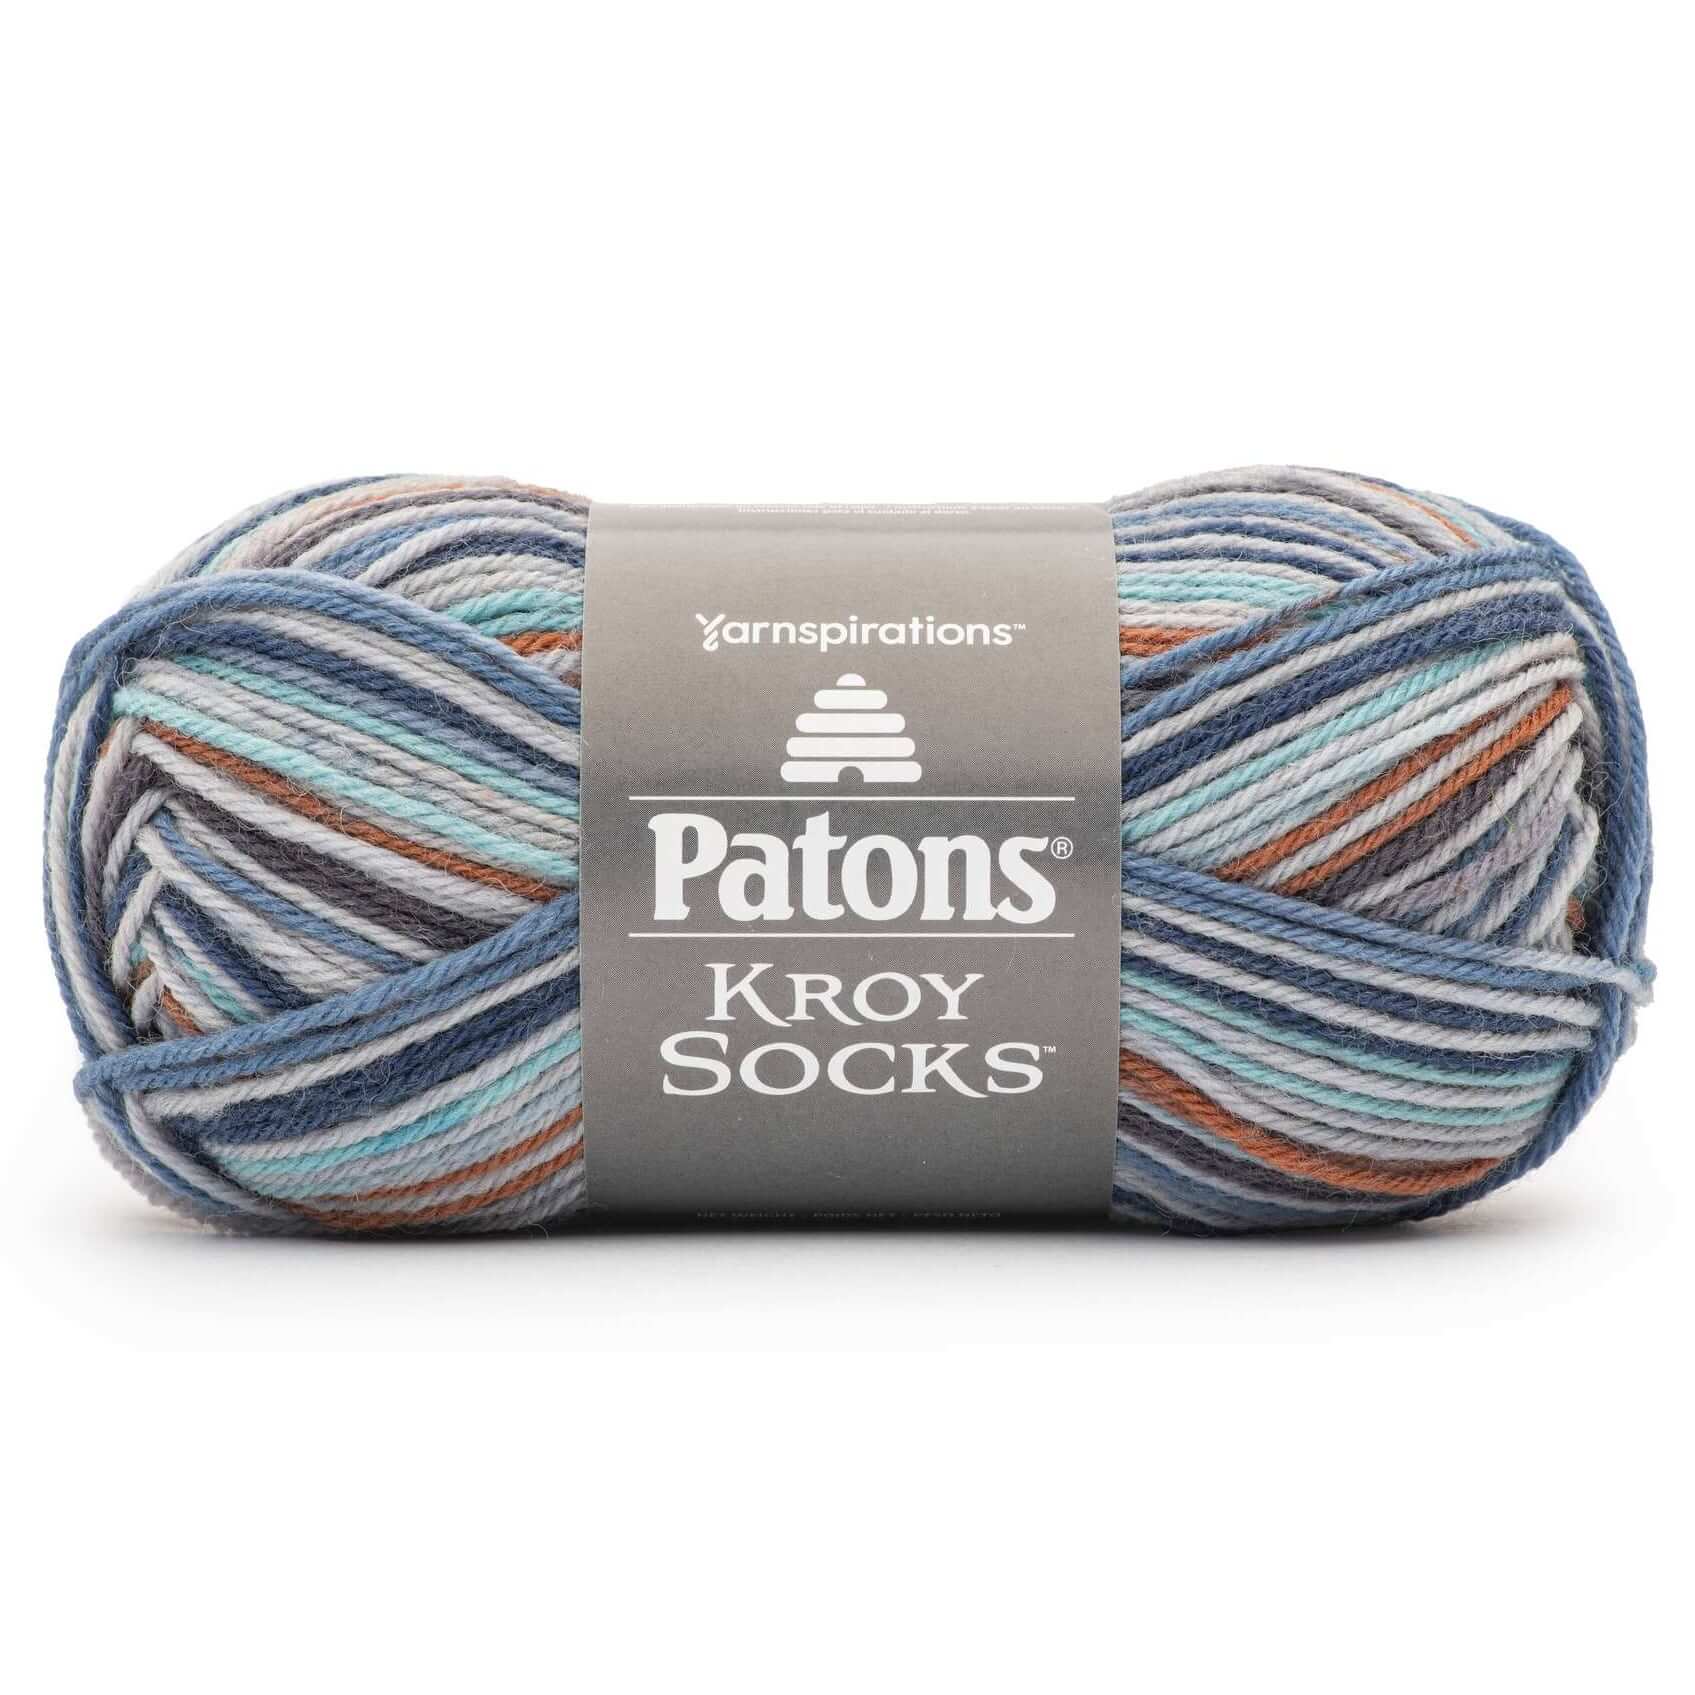 Patons Yarn, Kroy Sock, Easy-Care Machine Wash Knitting Yarn for Socks Kroy Sock Yarn from Patons Yarn Designers Boutique